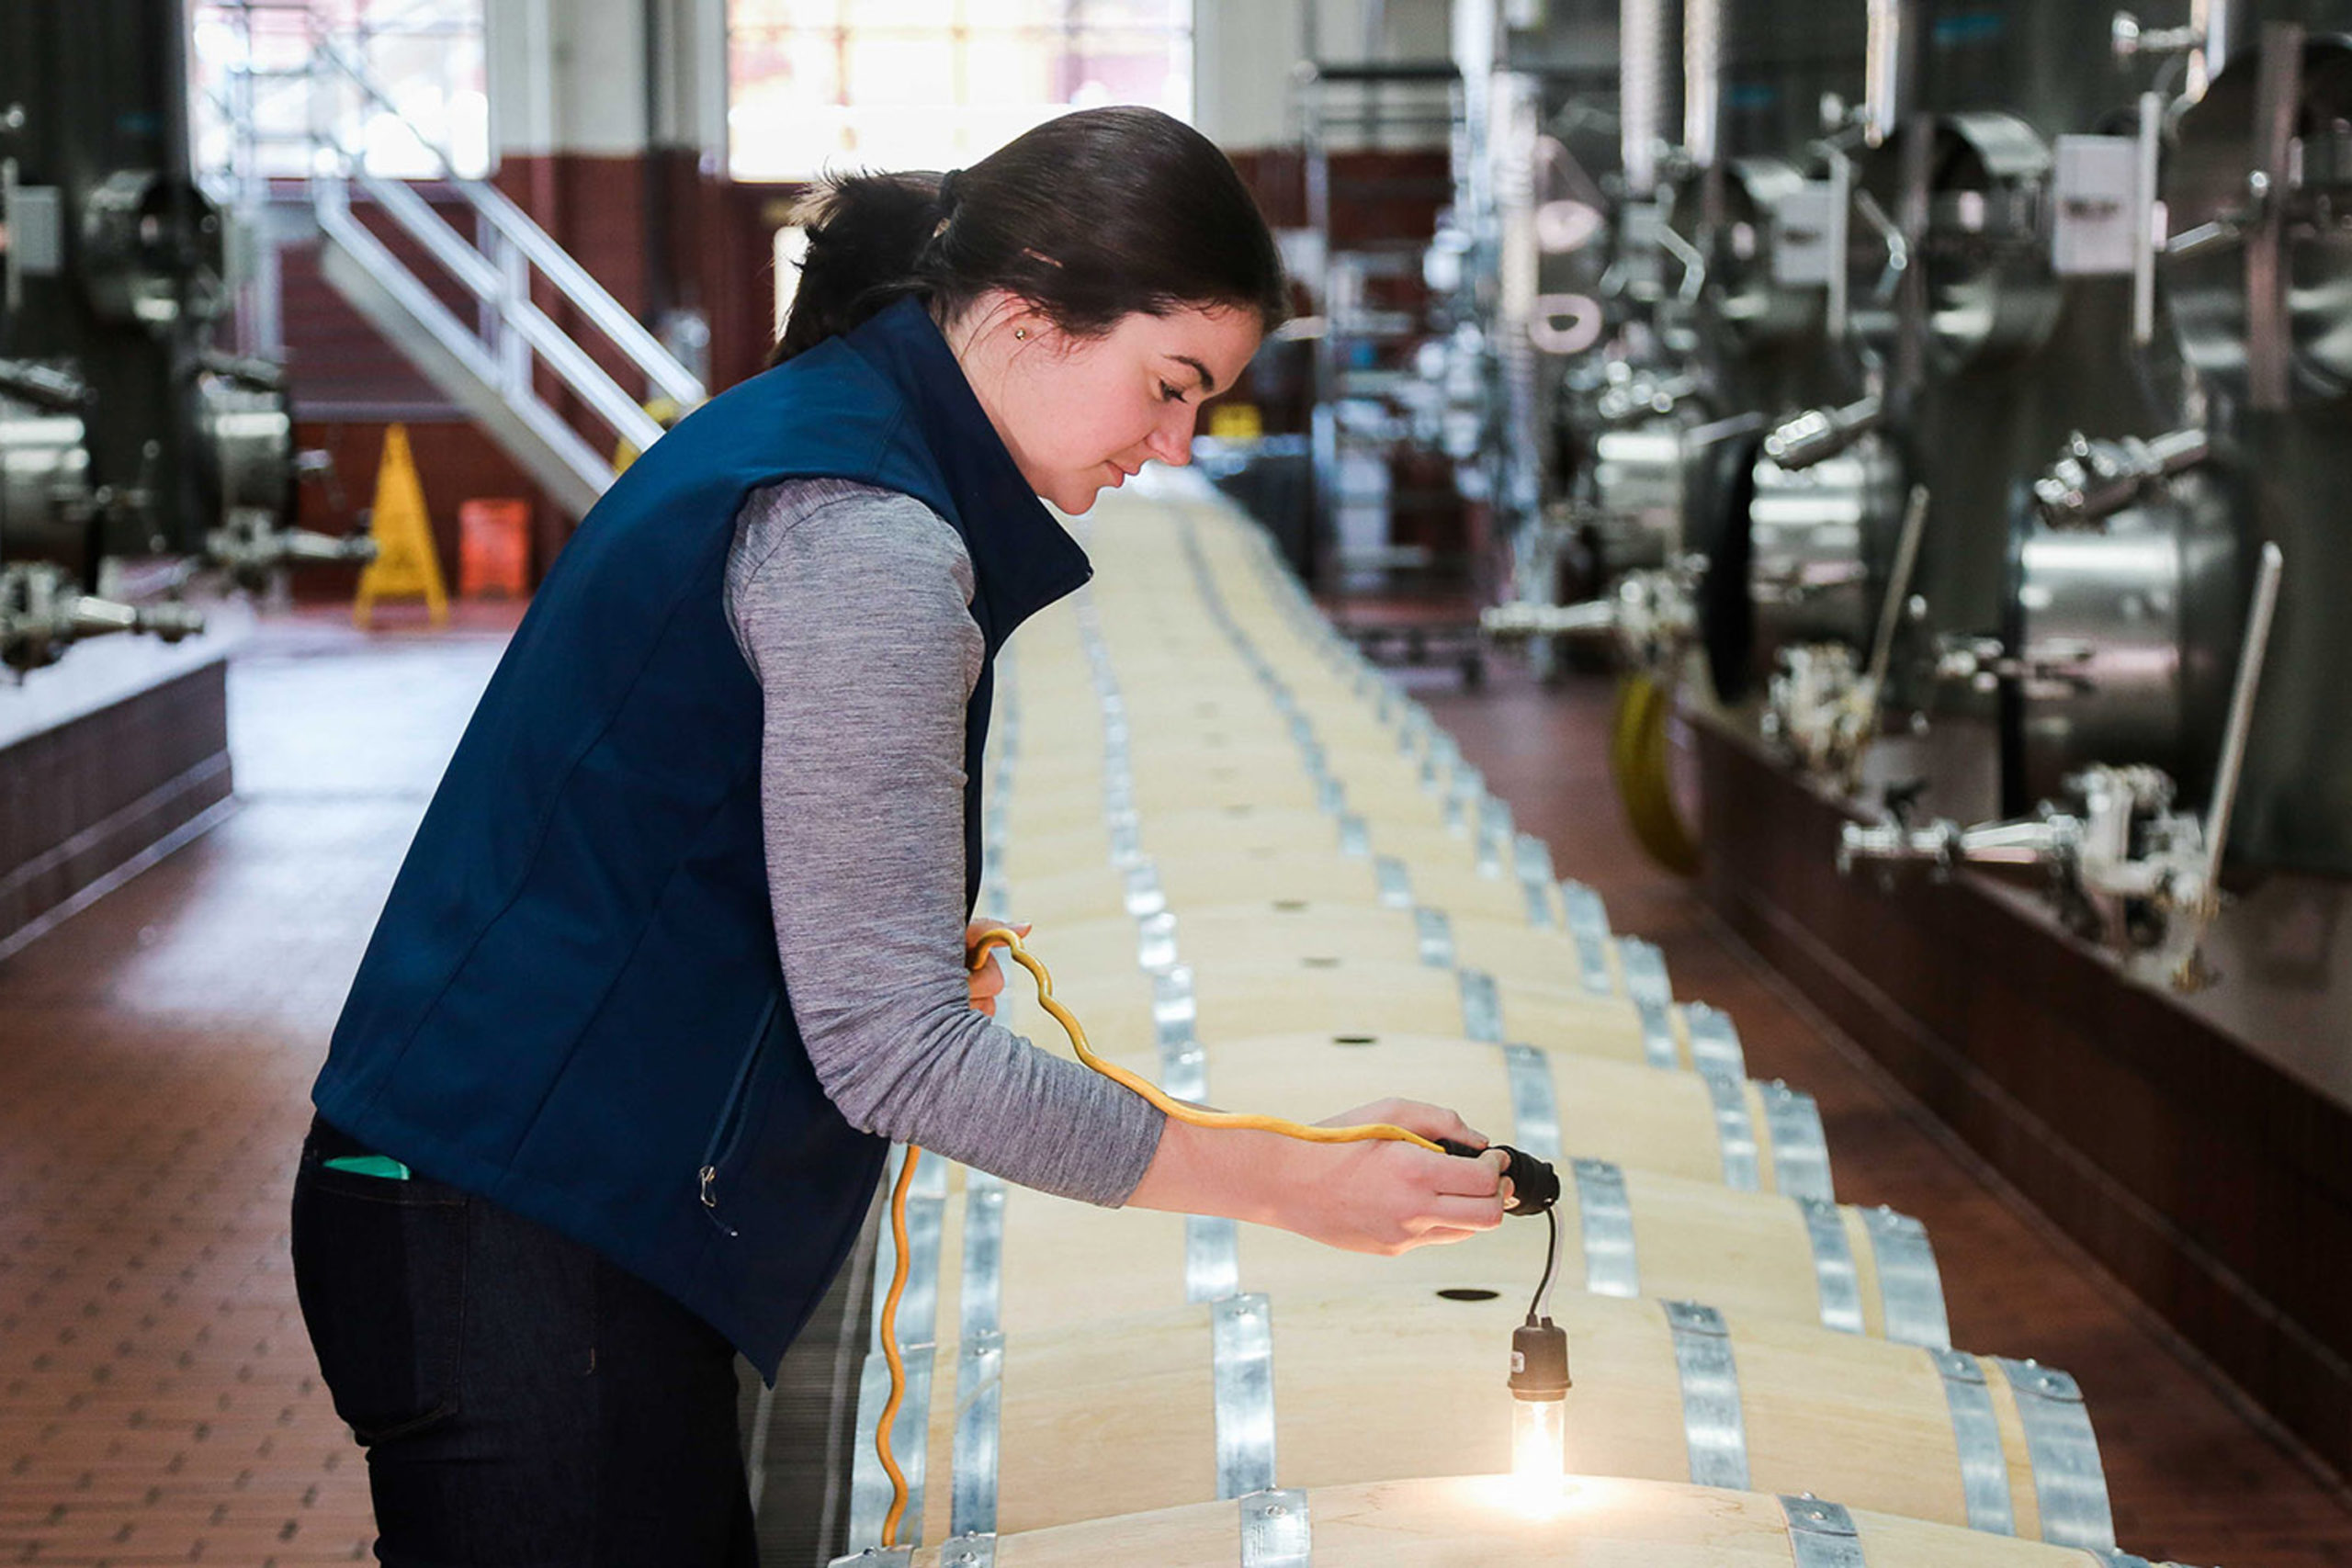 Winemaker Maggie Kruse inspecting barrels